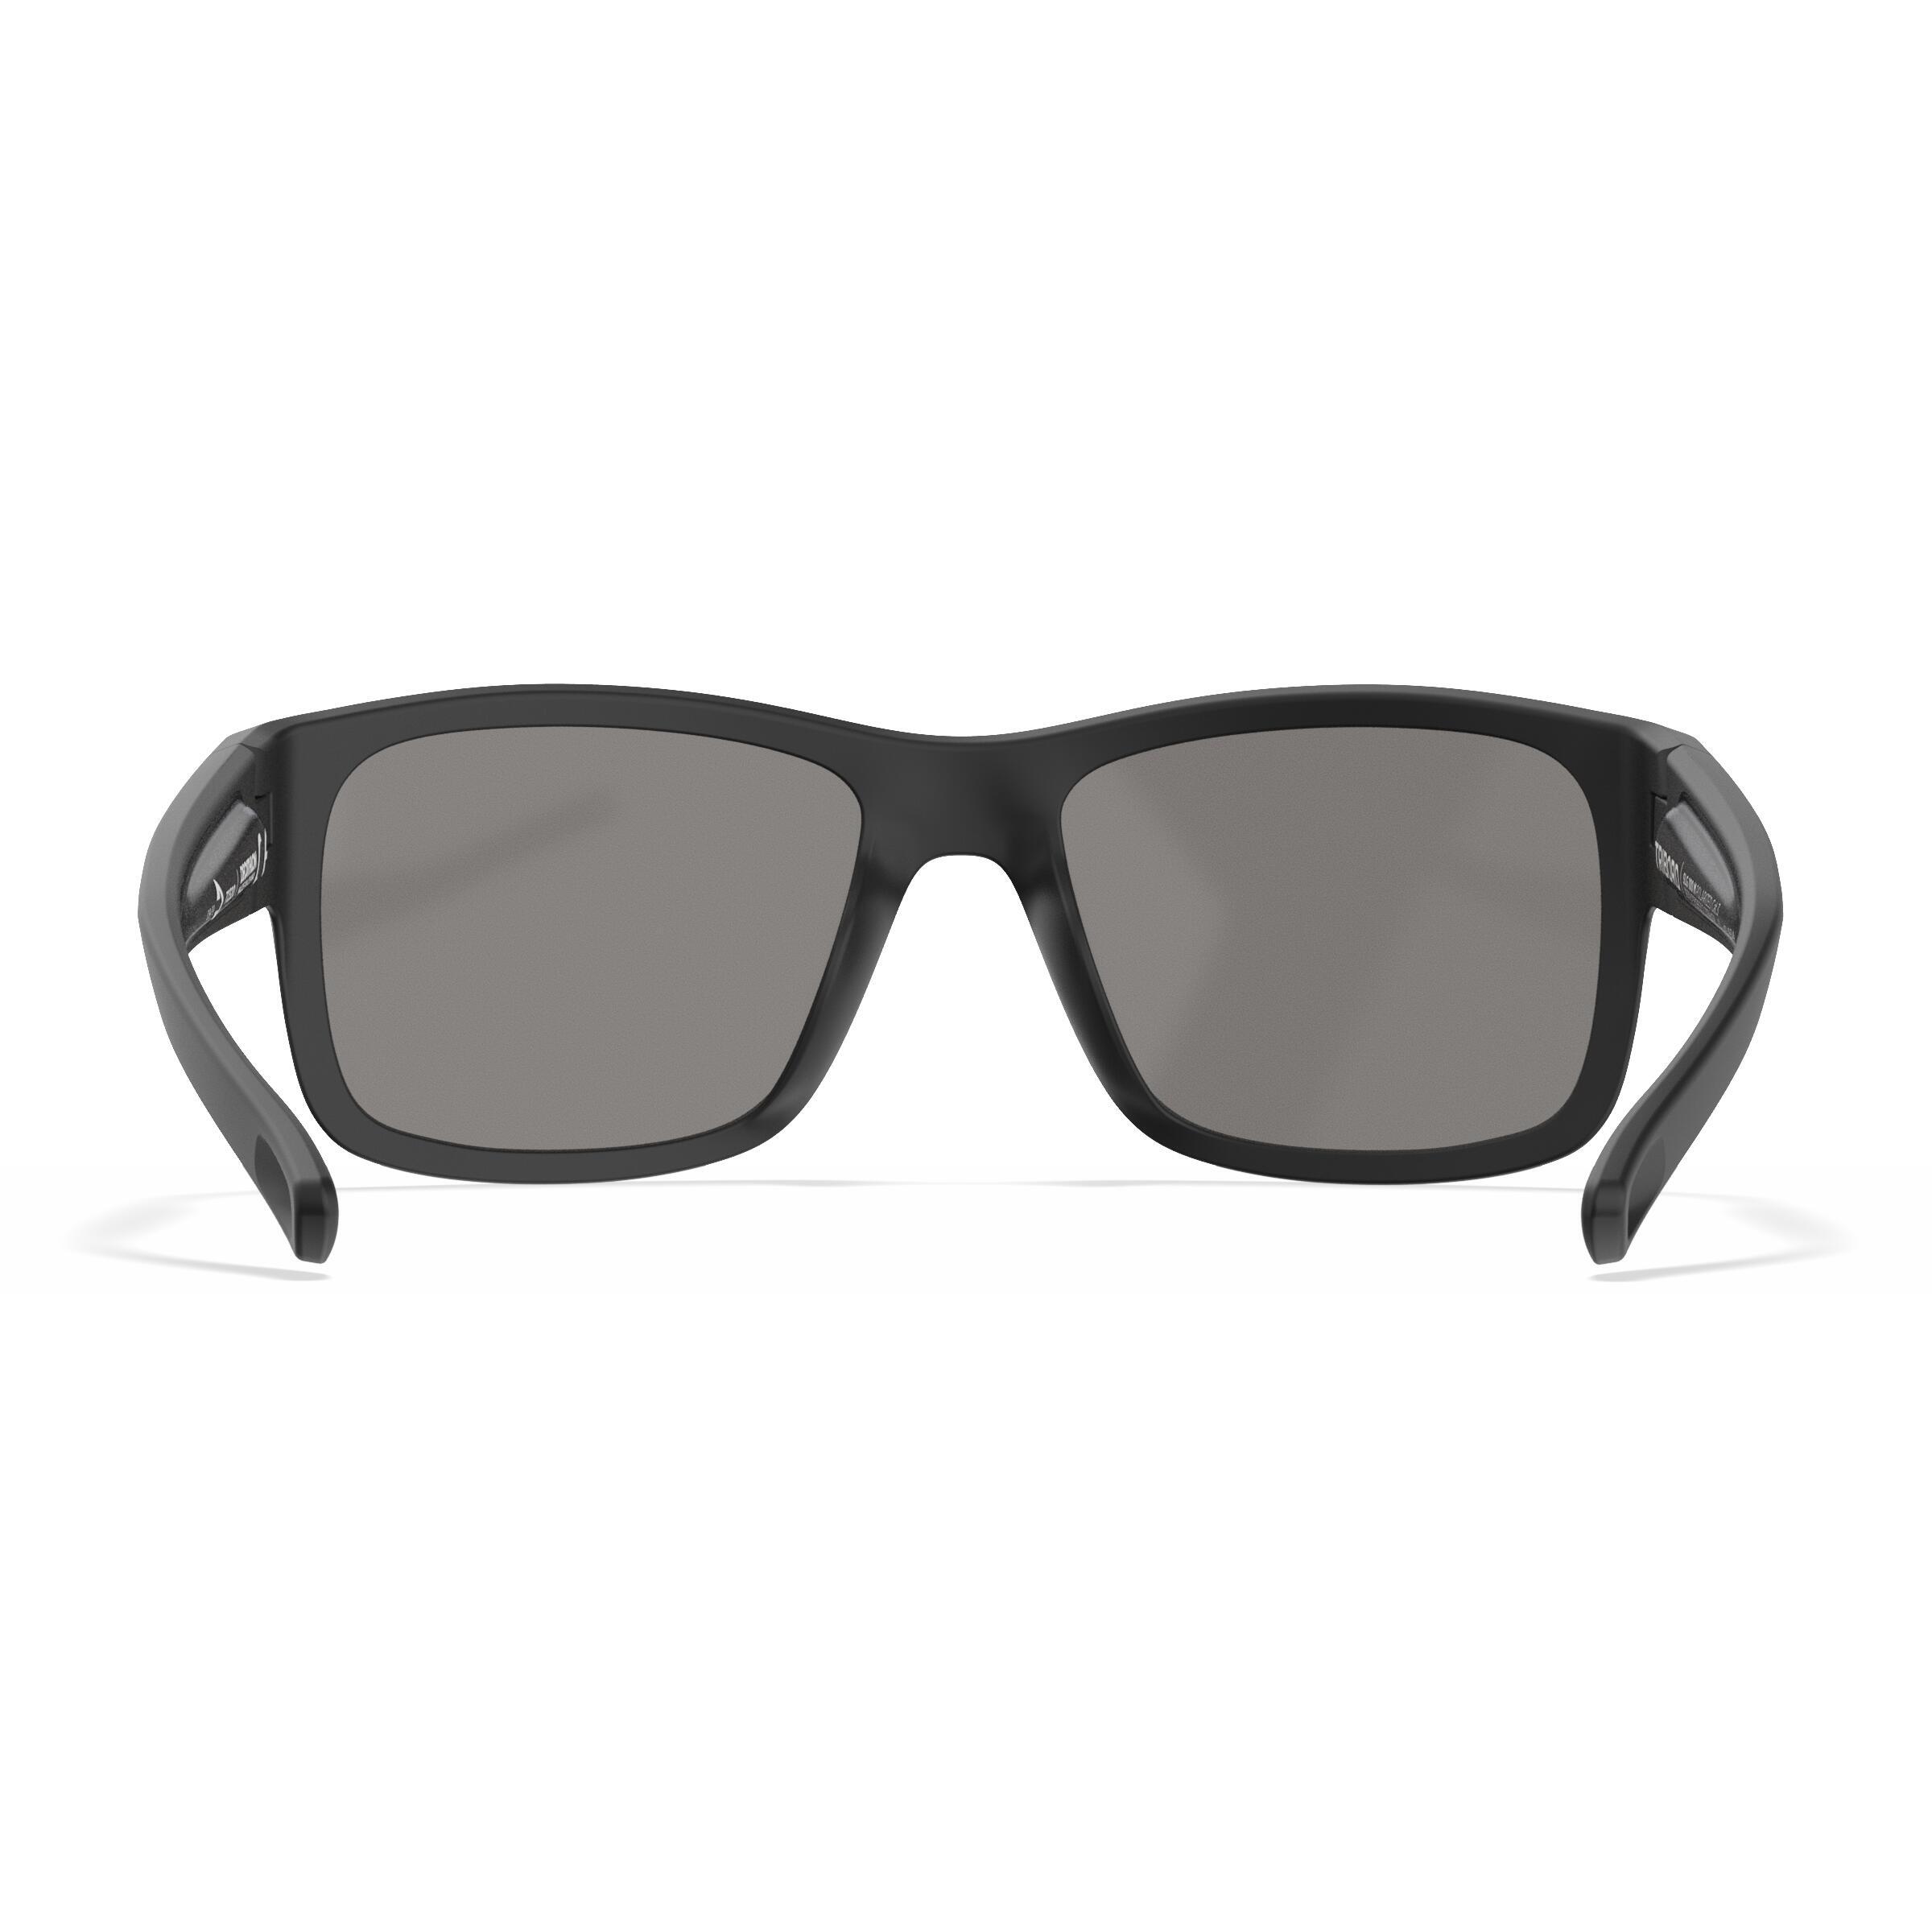 Adult Sailing Floating Polarised Sunglasses 100 - Size M Black 6/9